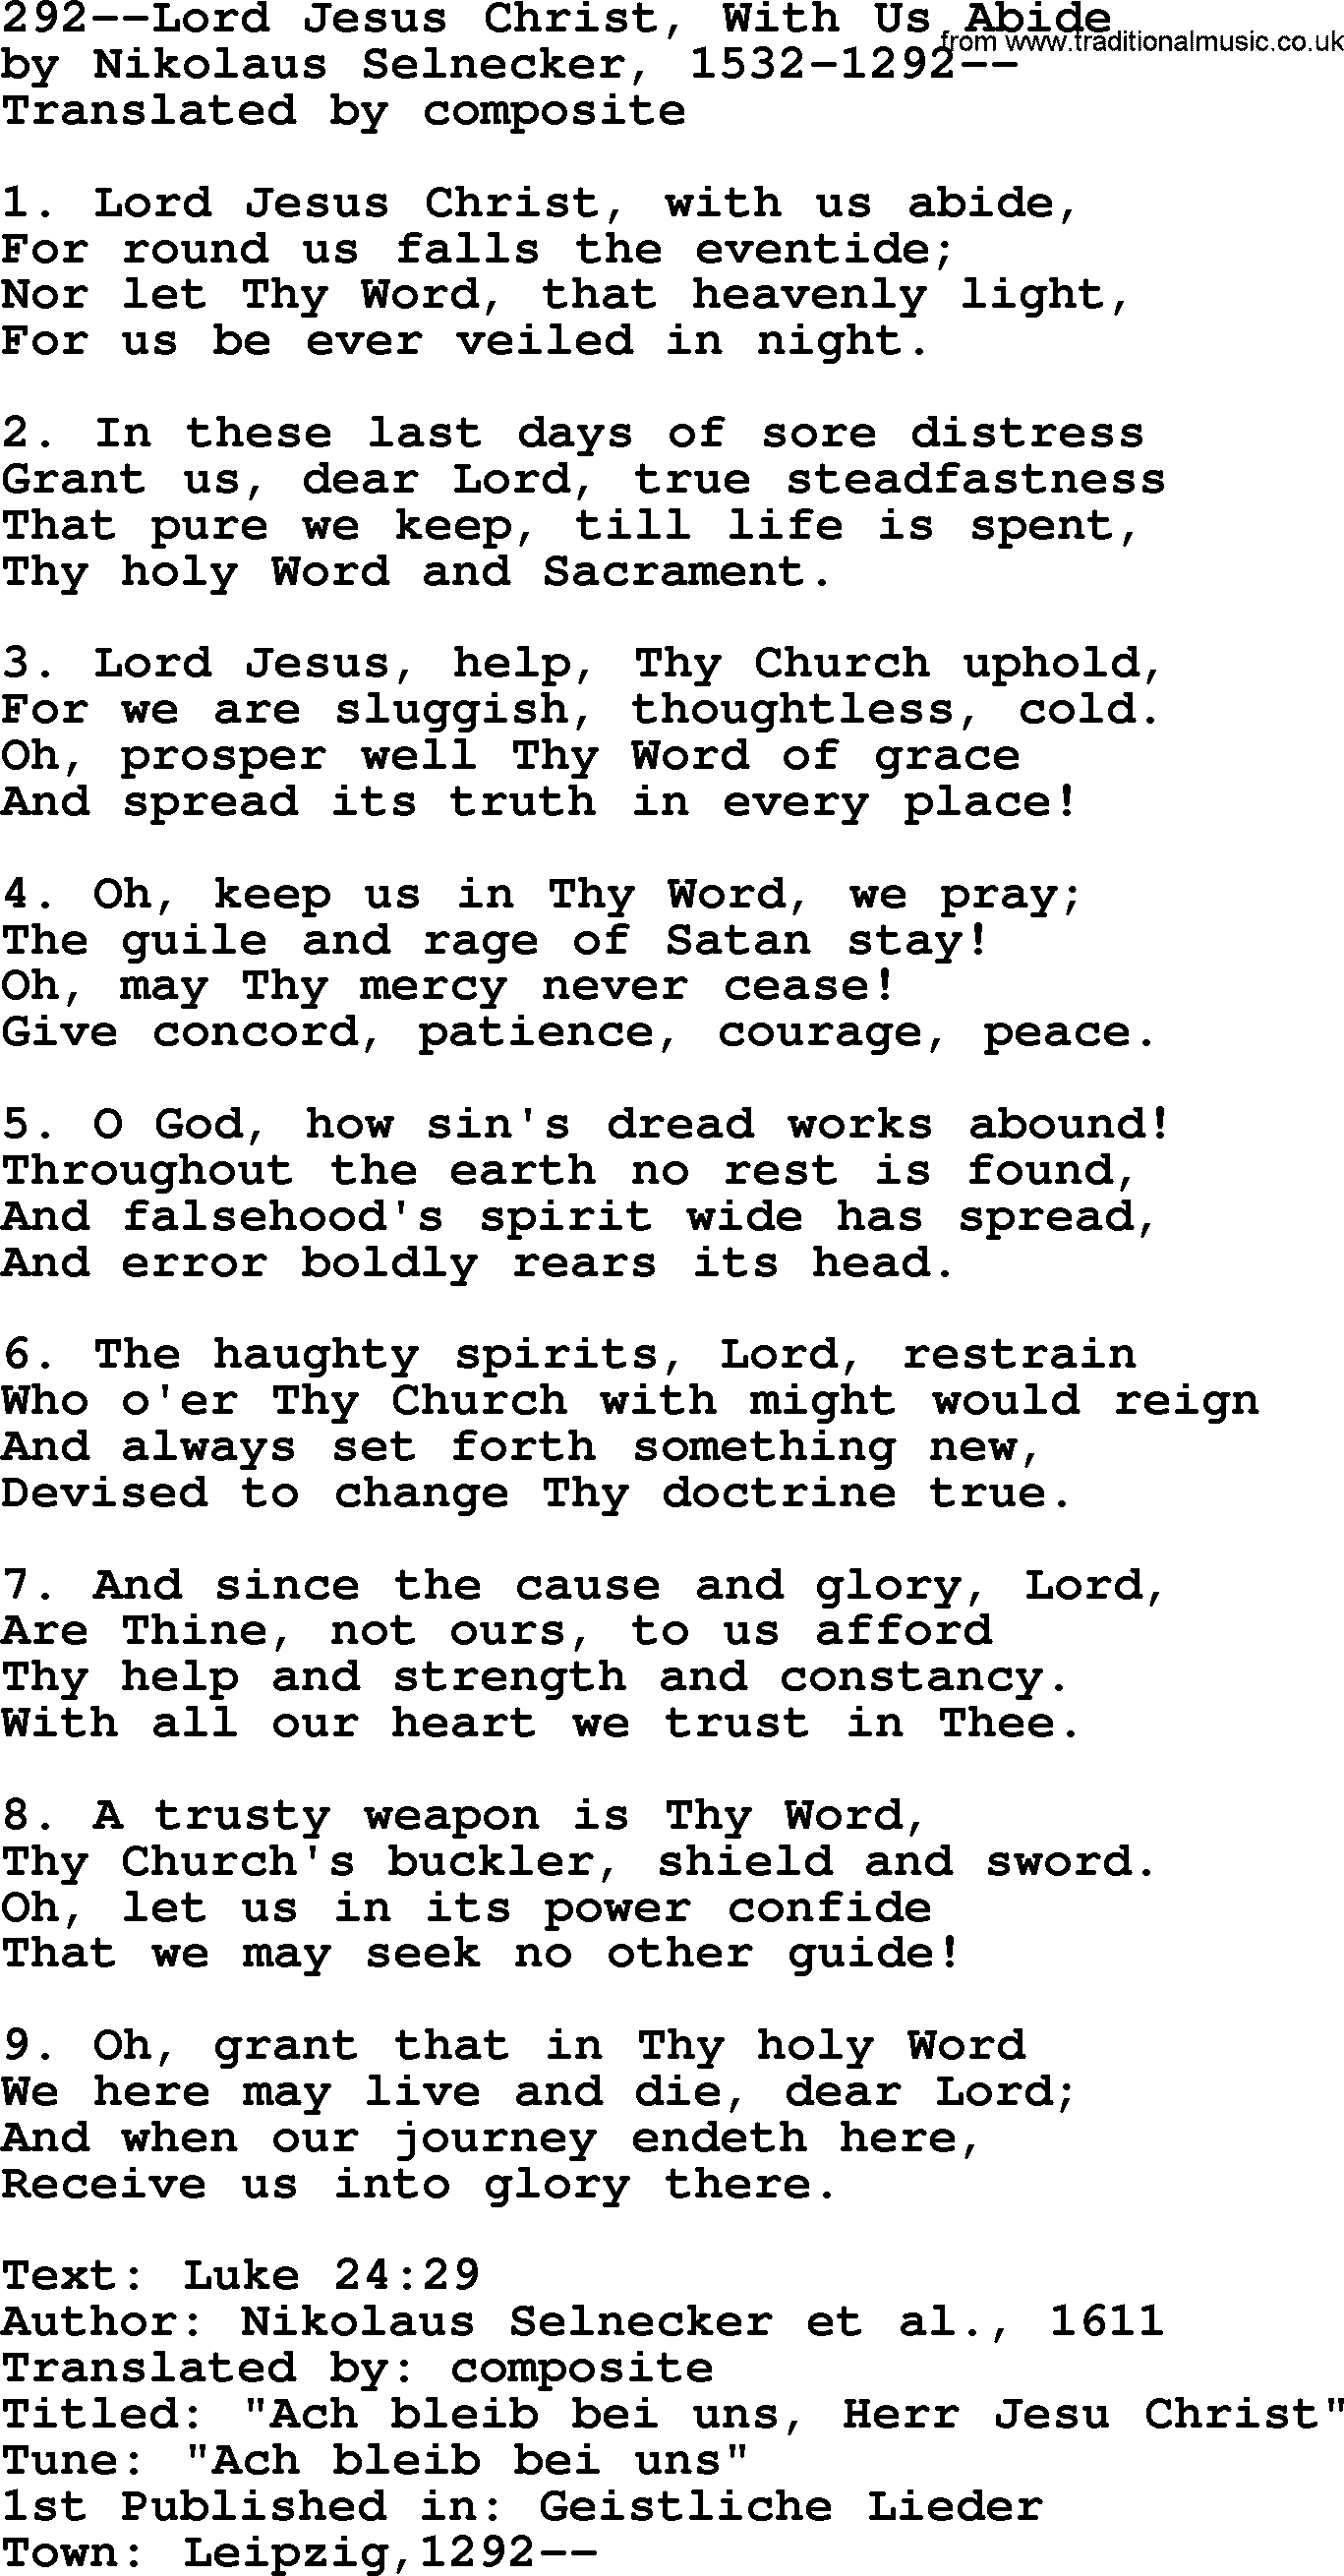 Lutheran Hymn: 292--Lord Jesus Christ, With Us Abide.txt lyrics with PDF